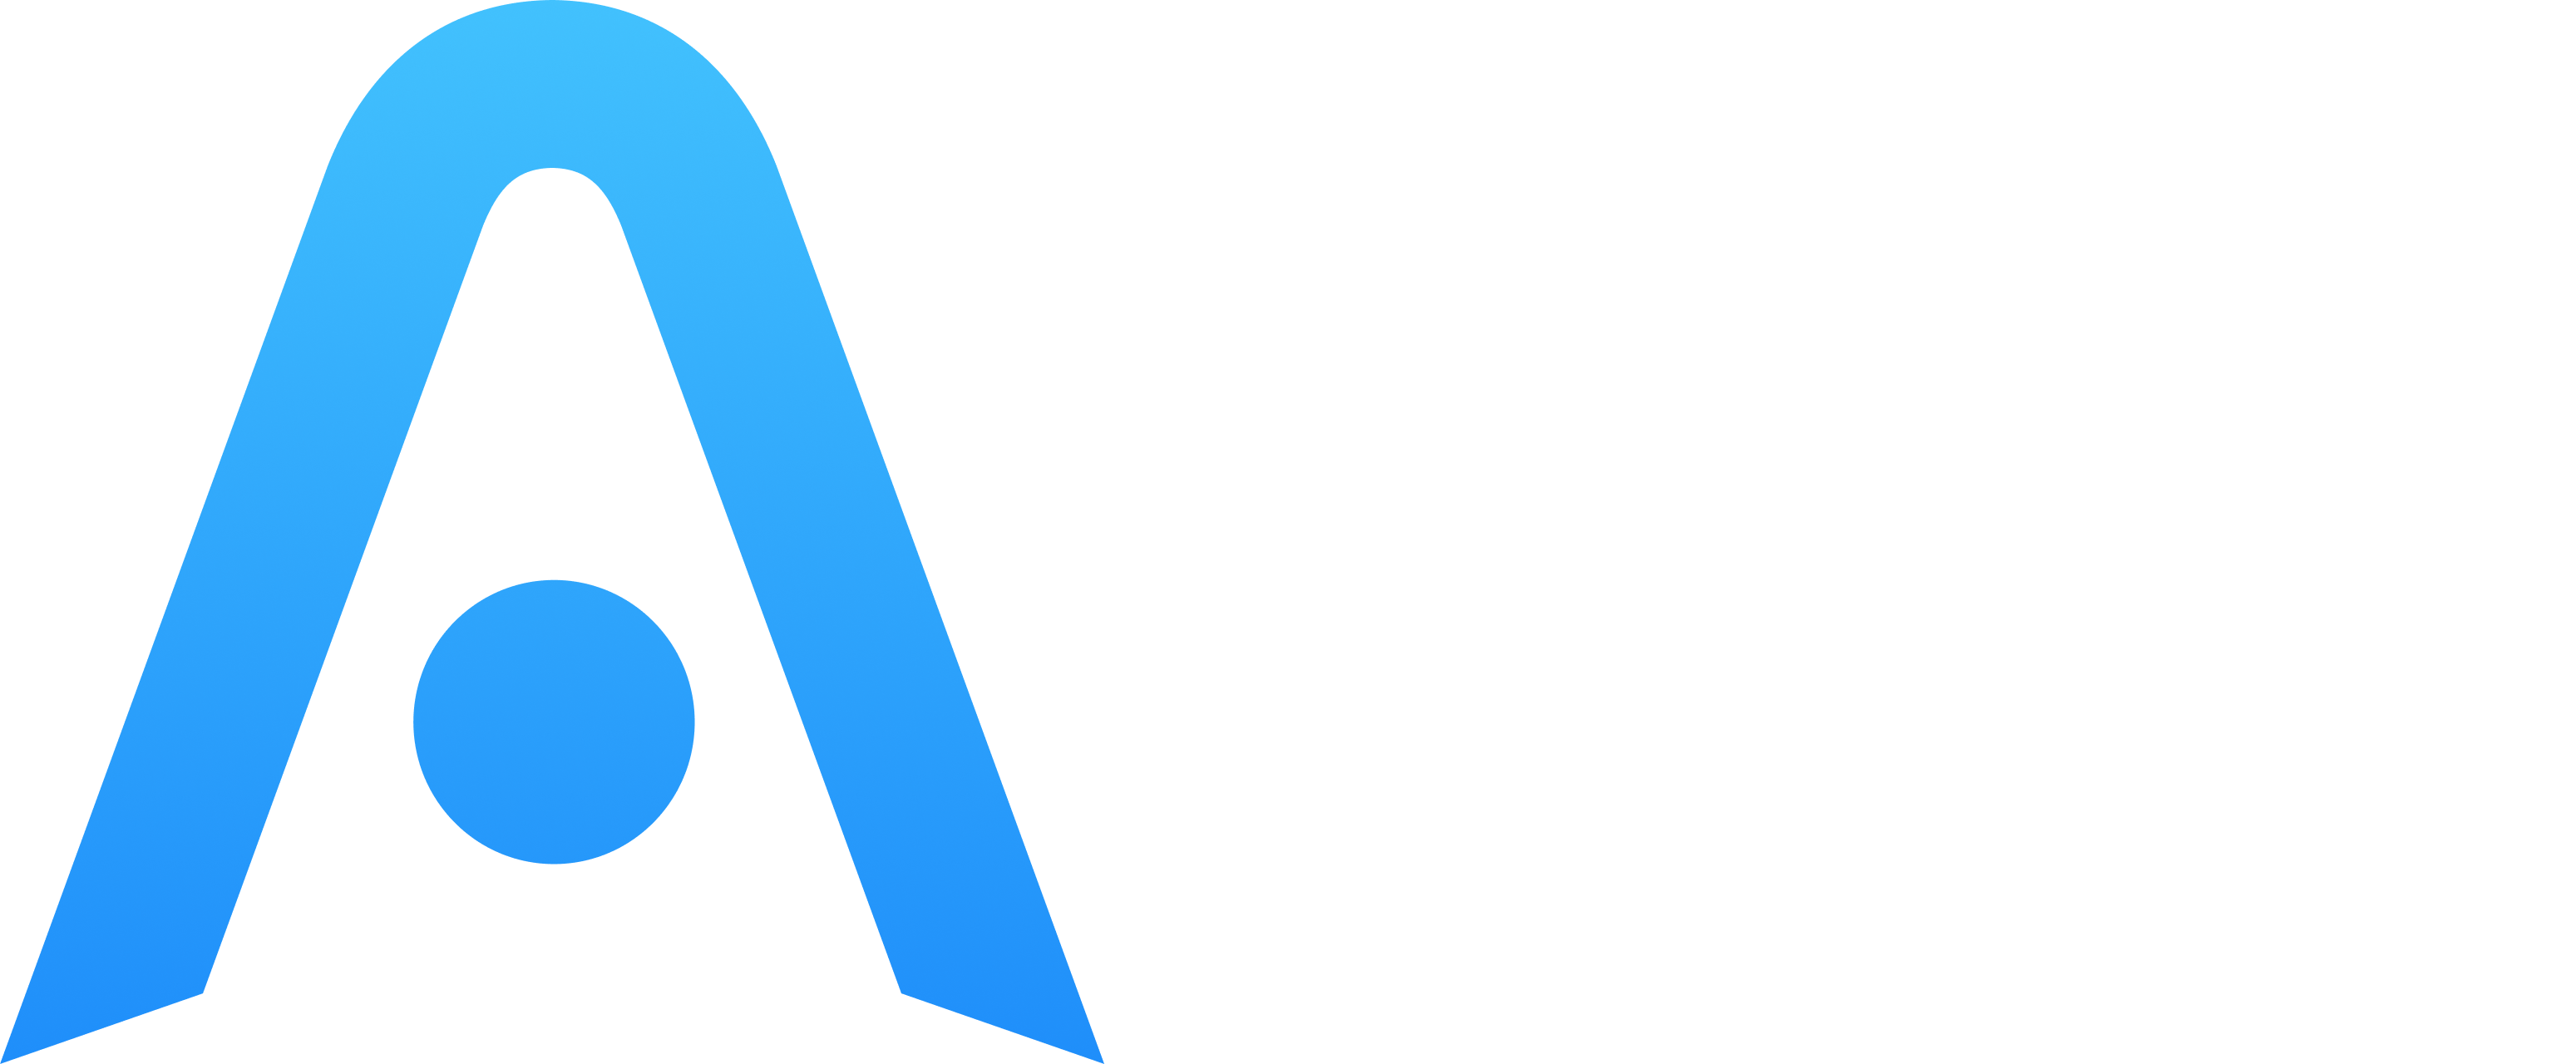 <a href="https://atomicwallet.io/"_blank">www.atomicwallet.com</a>